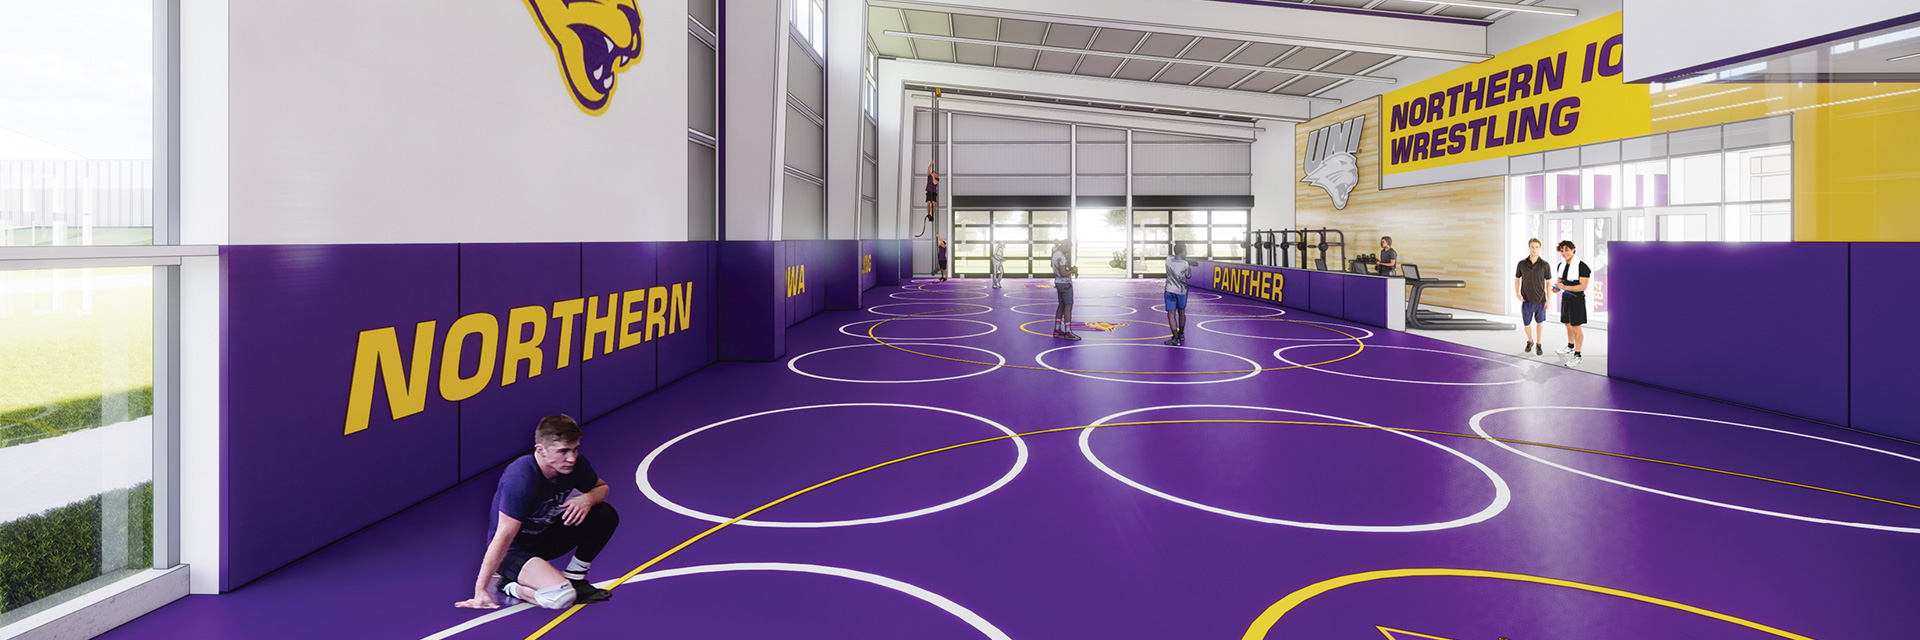 UNI Wrestling Training Facility mat room conceptual rendering